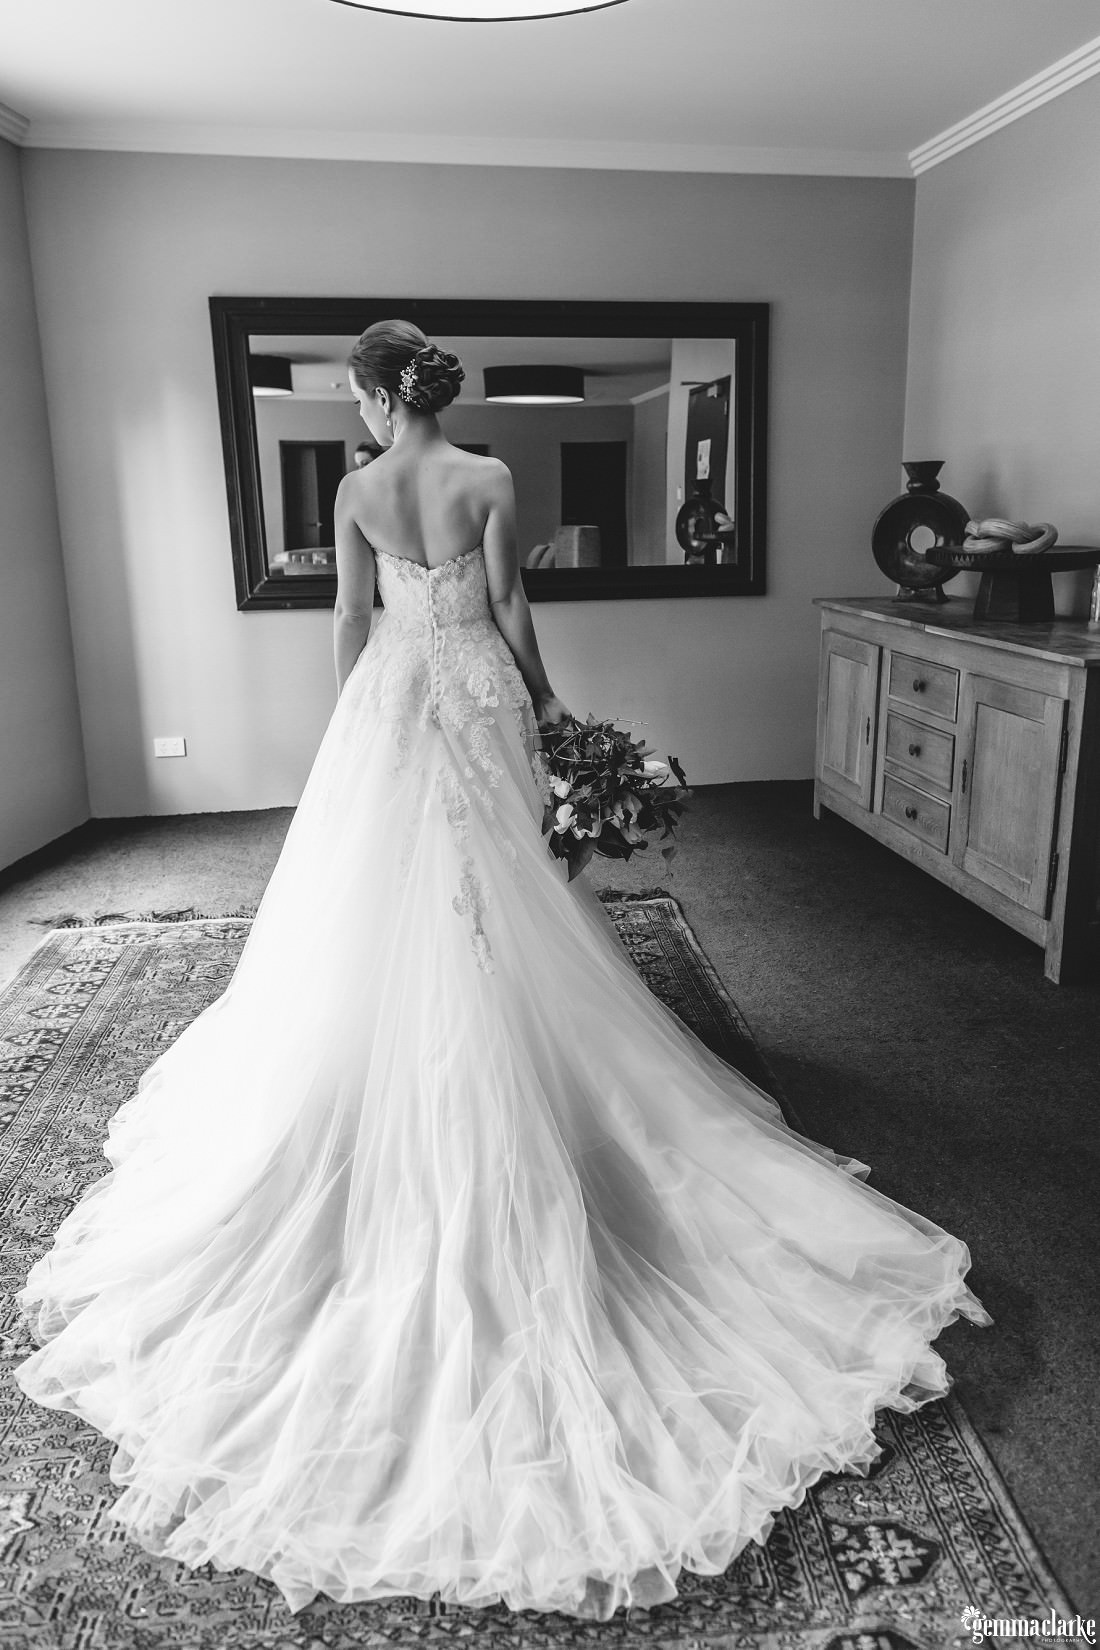 A bride posing in front of a mirror